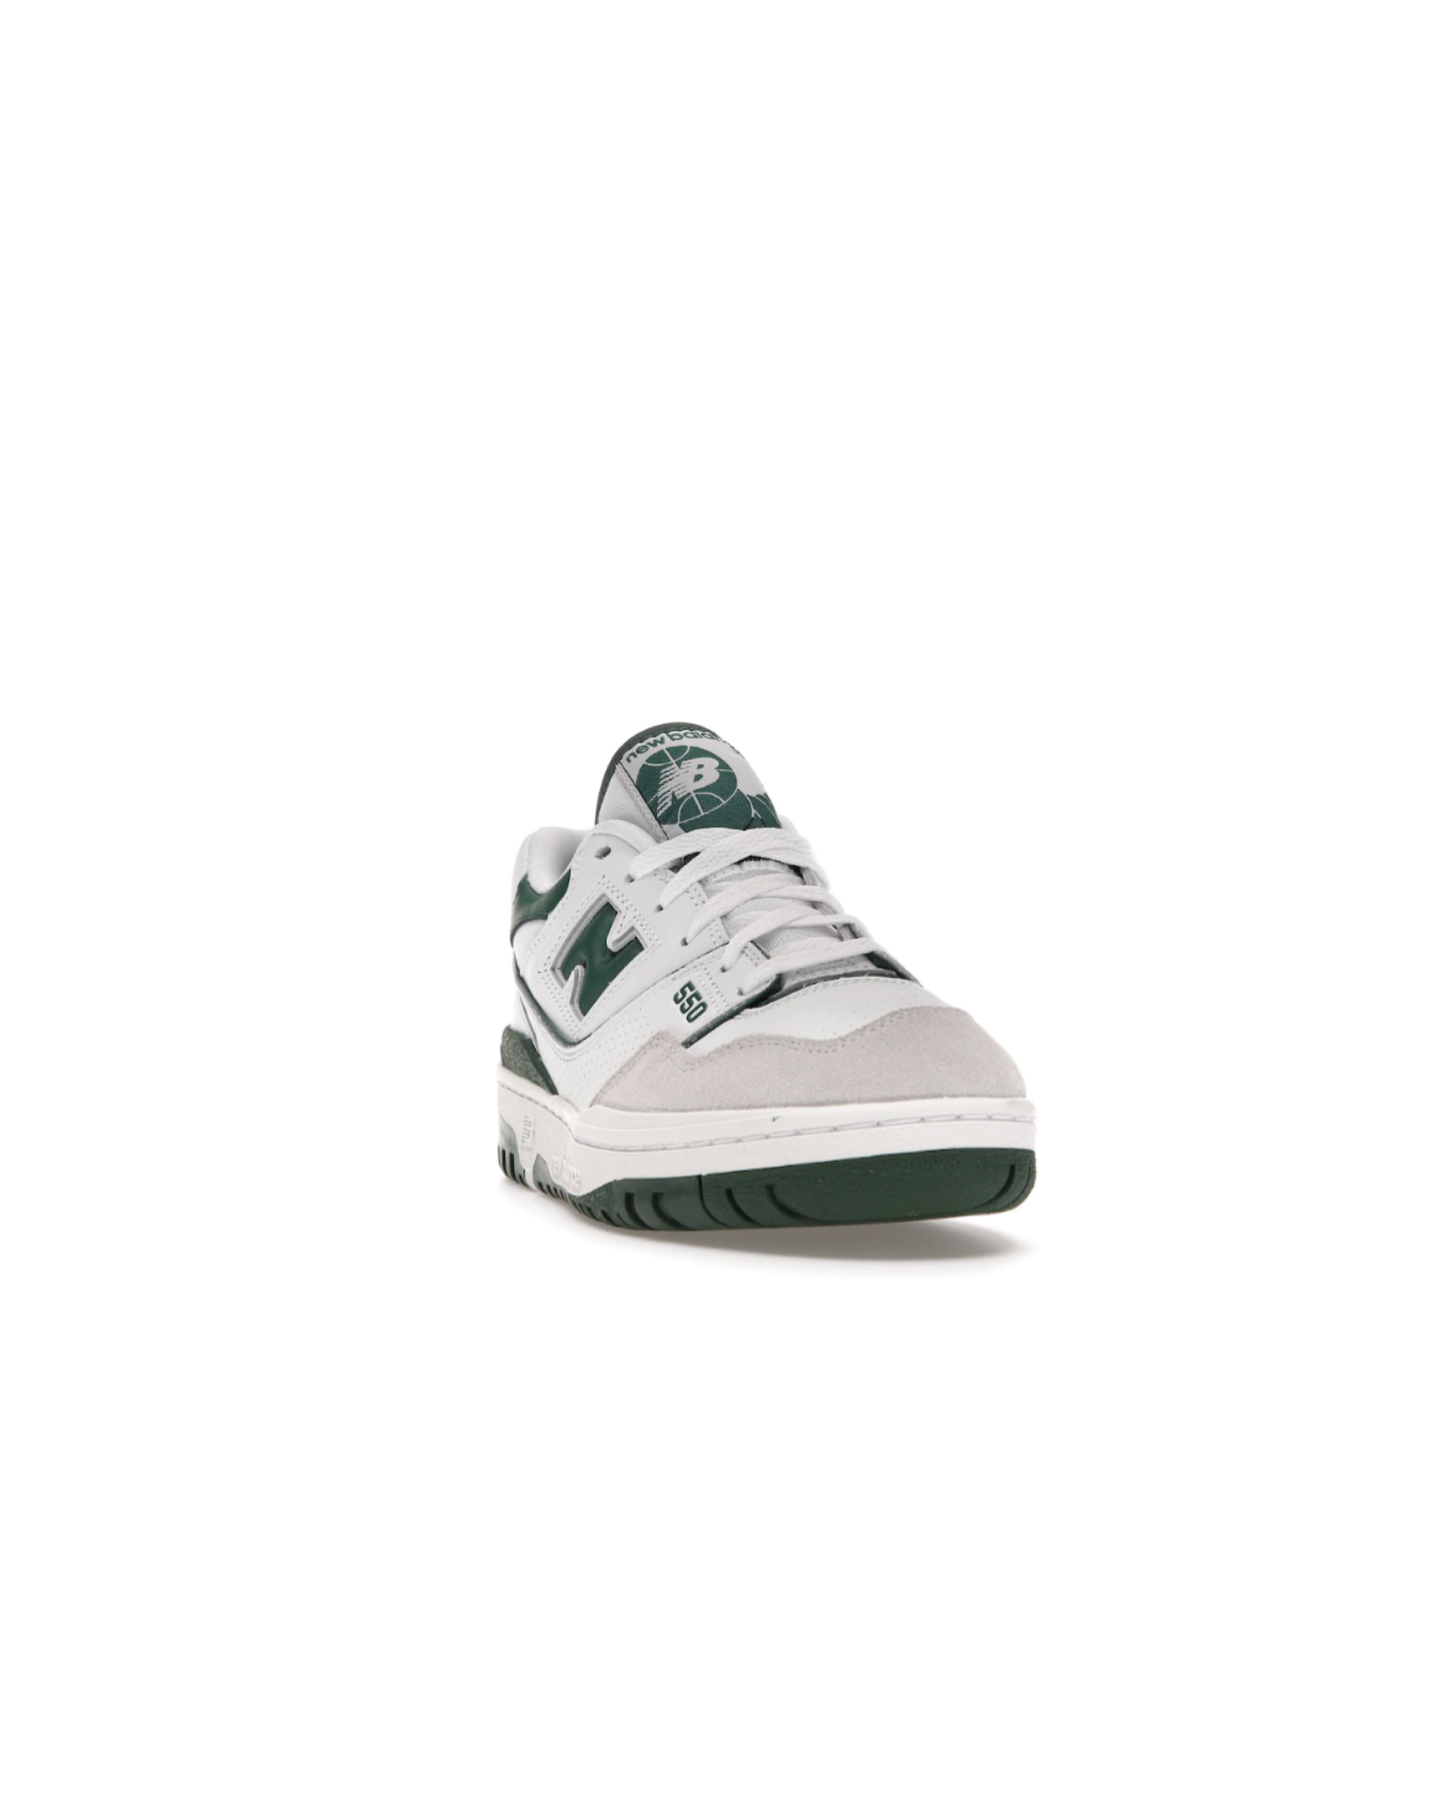 NB 550 “white green”